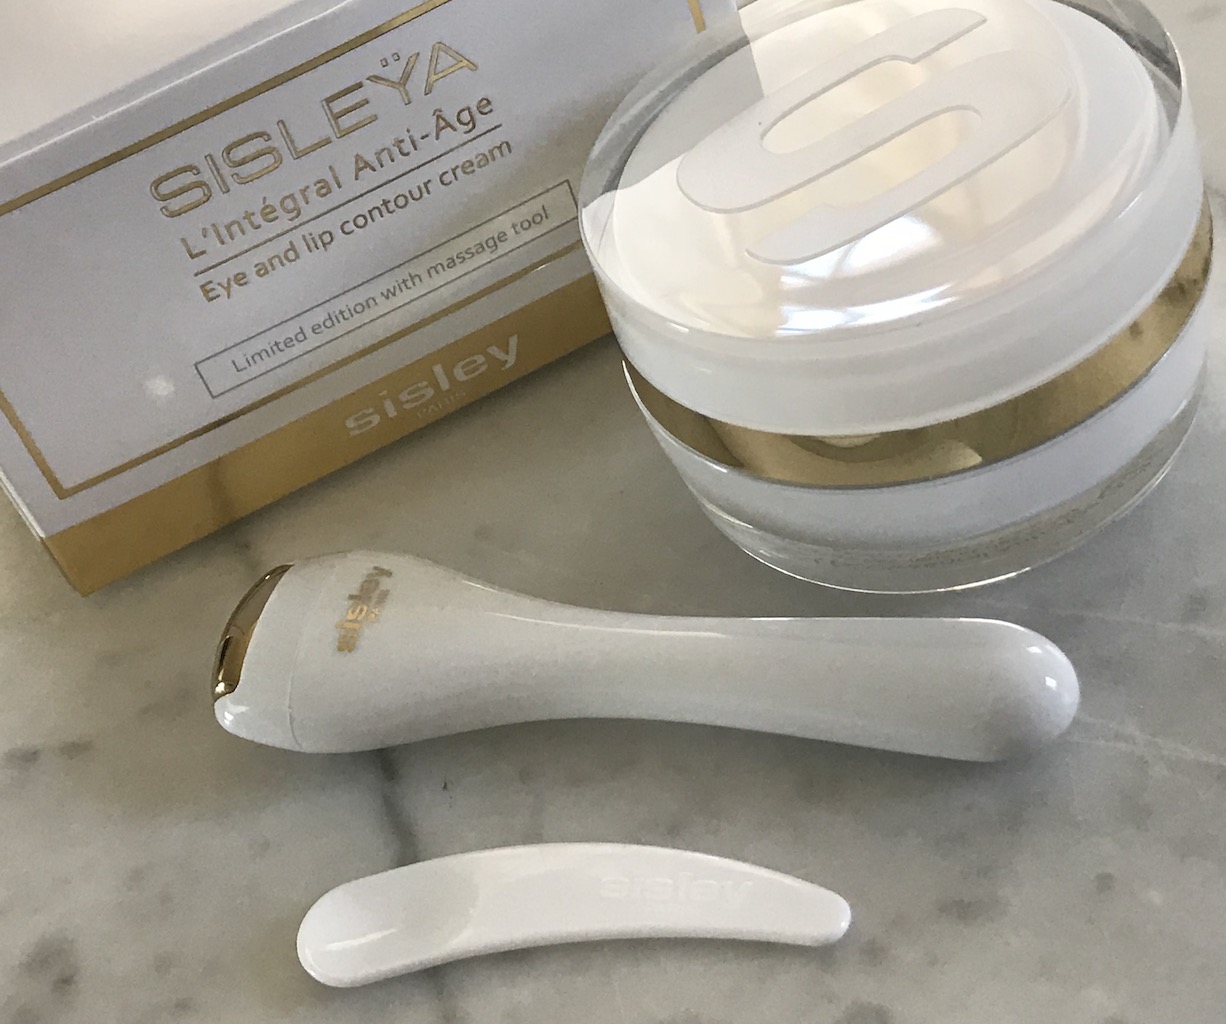 sisleÿa lintegral anti age eye and lip contour cream review